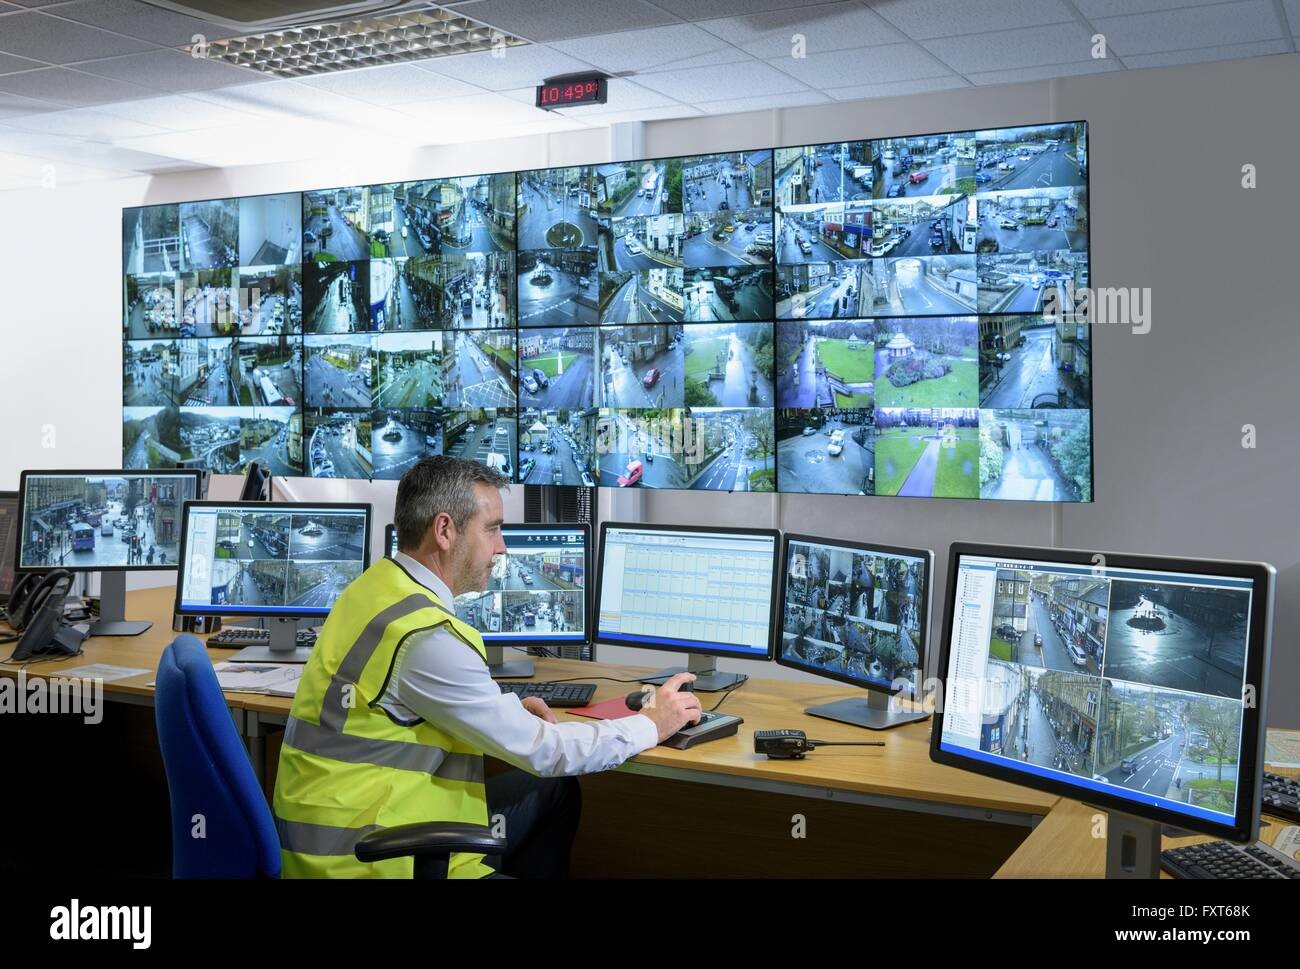 Giải pháp display control room giám sát an ninh